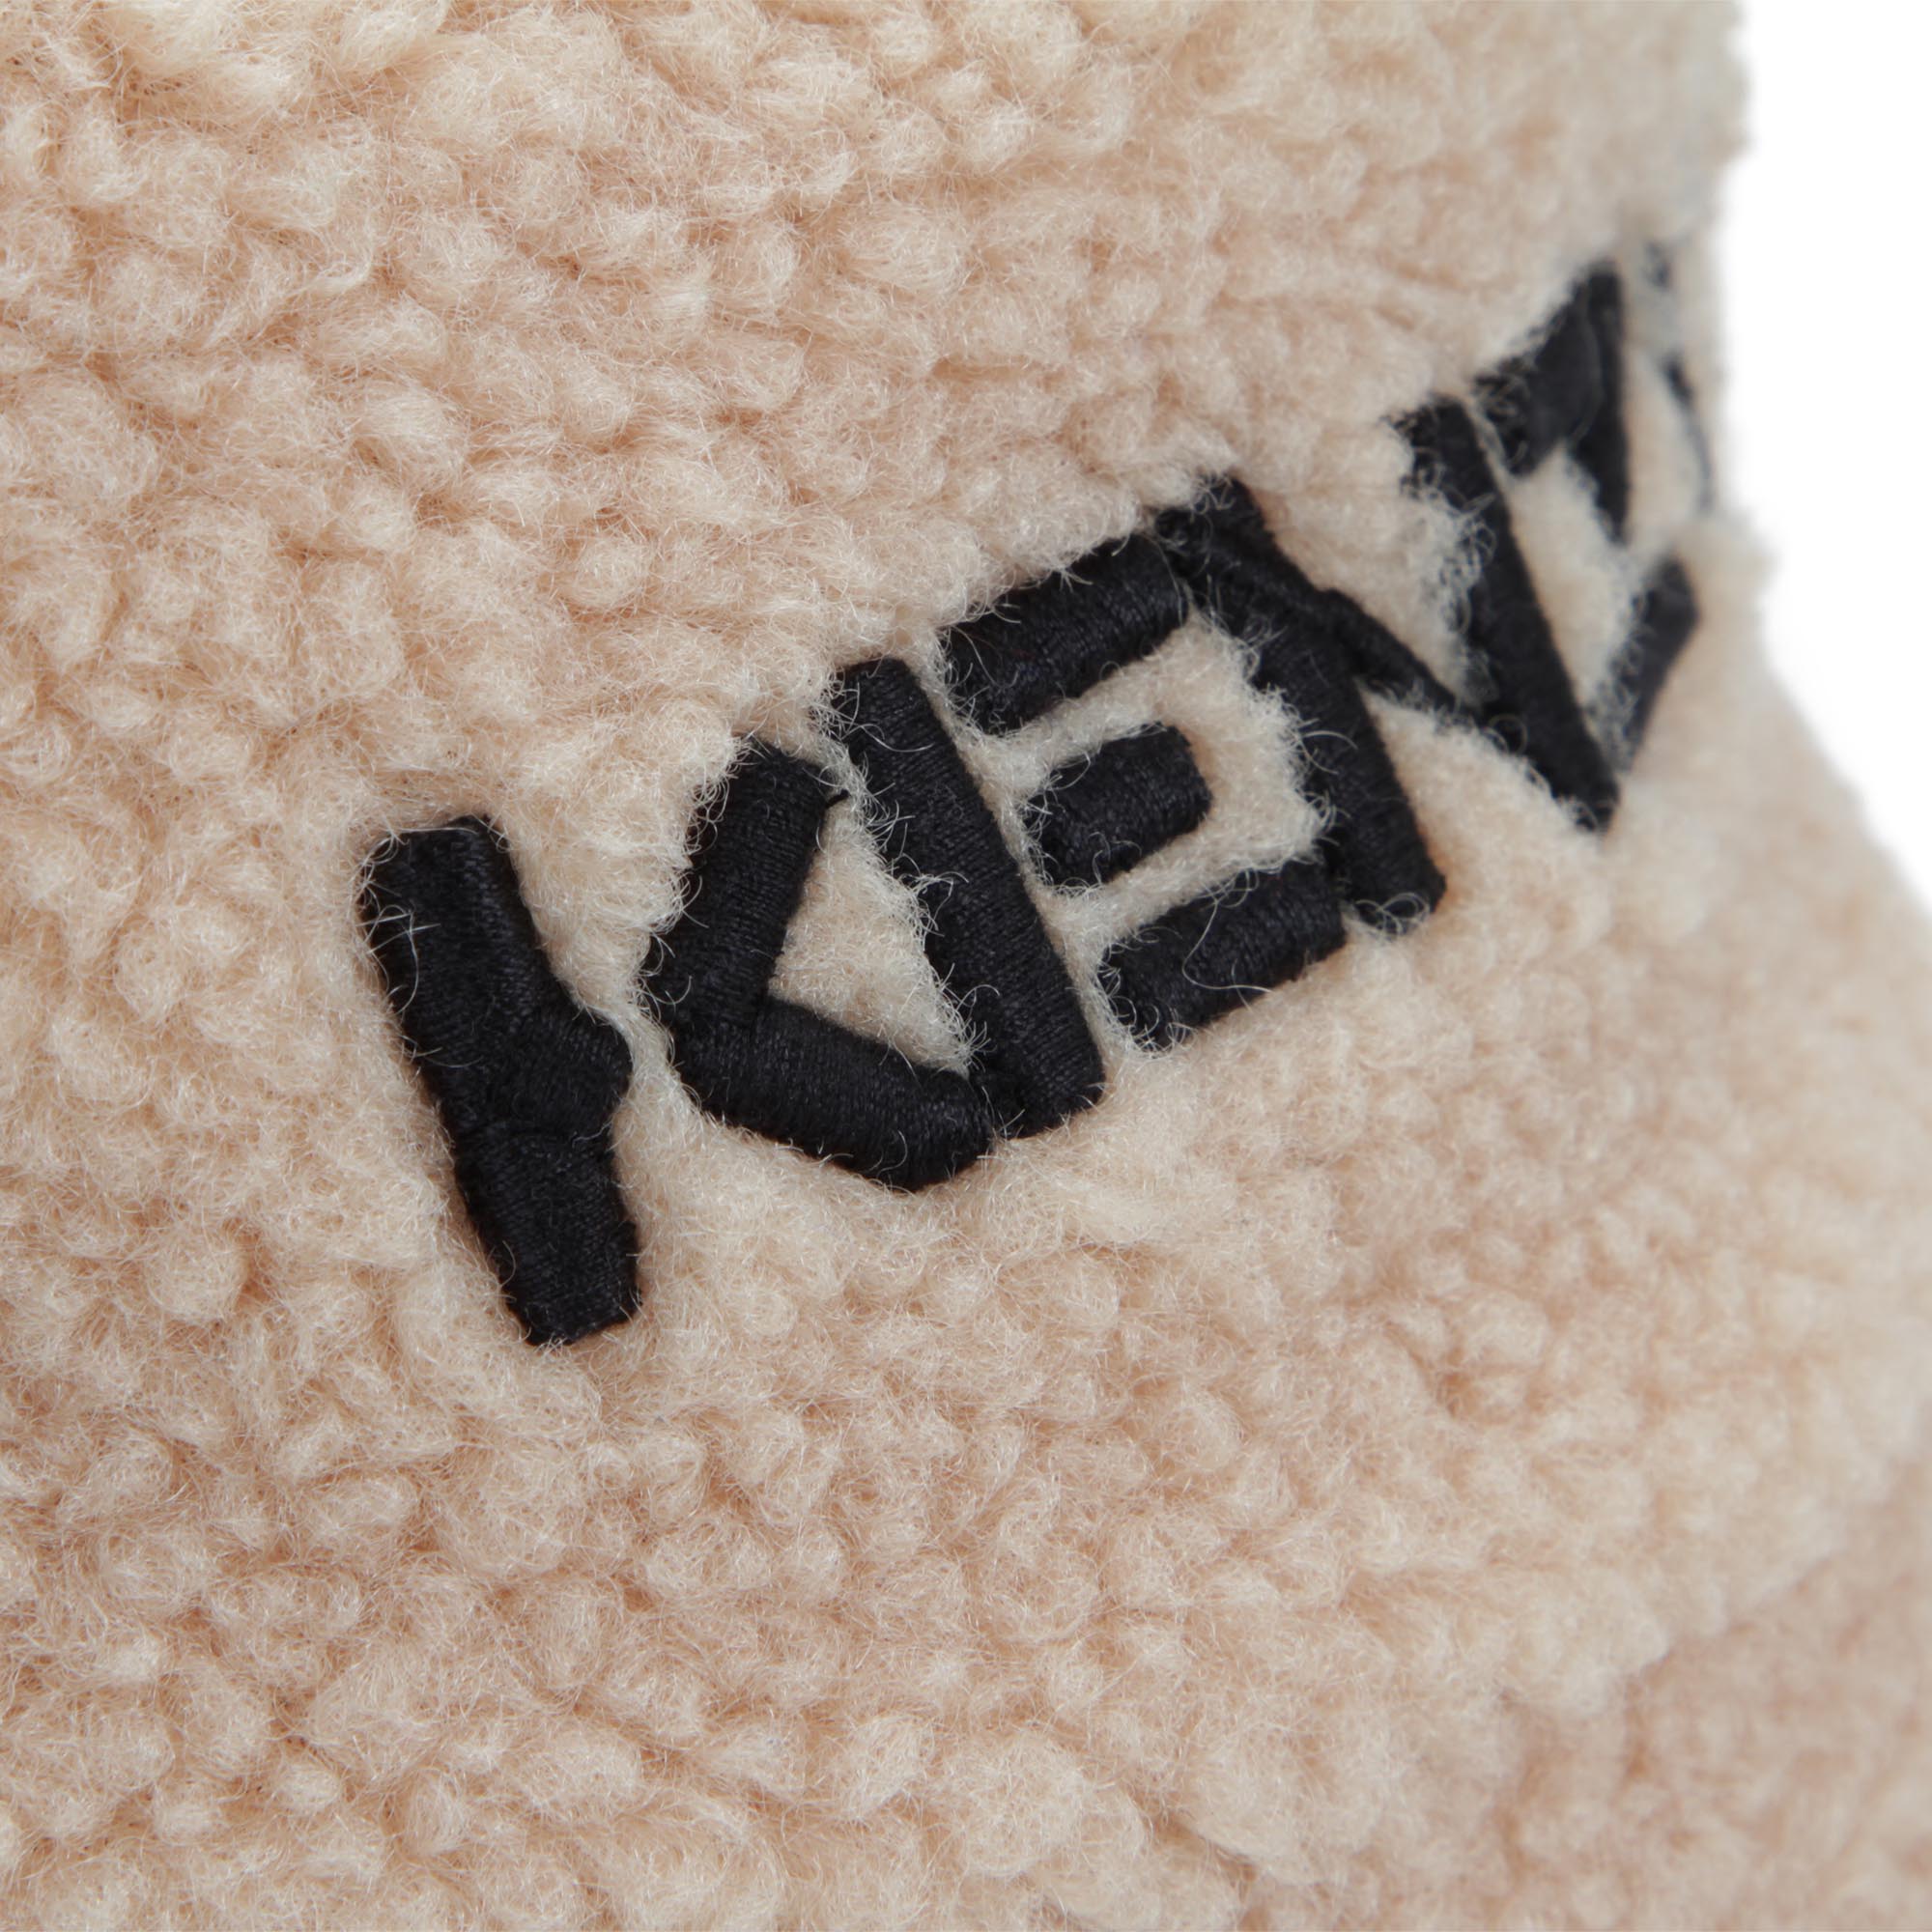 Fluffy fleece bucket hat KENZO KIDS for UNISEX